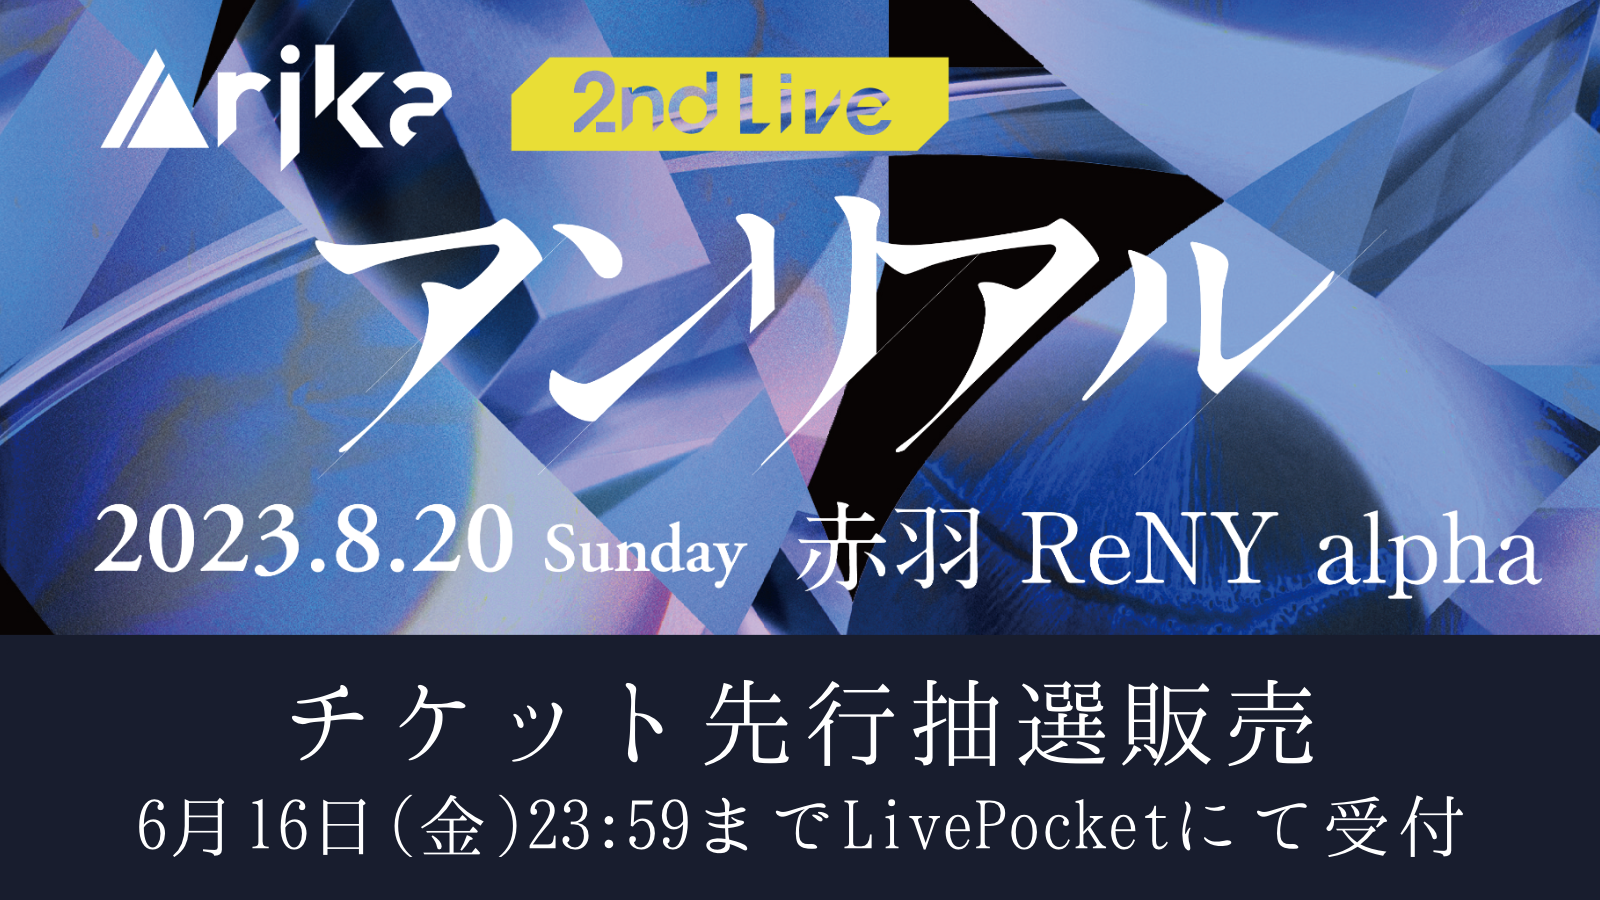 Arika 2nd Live 「アンリアル」